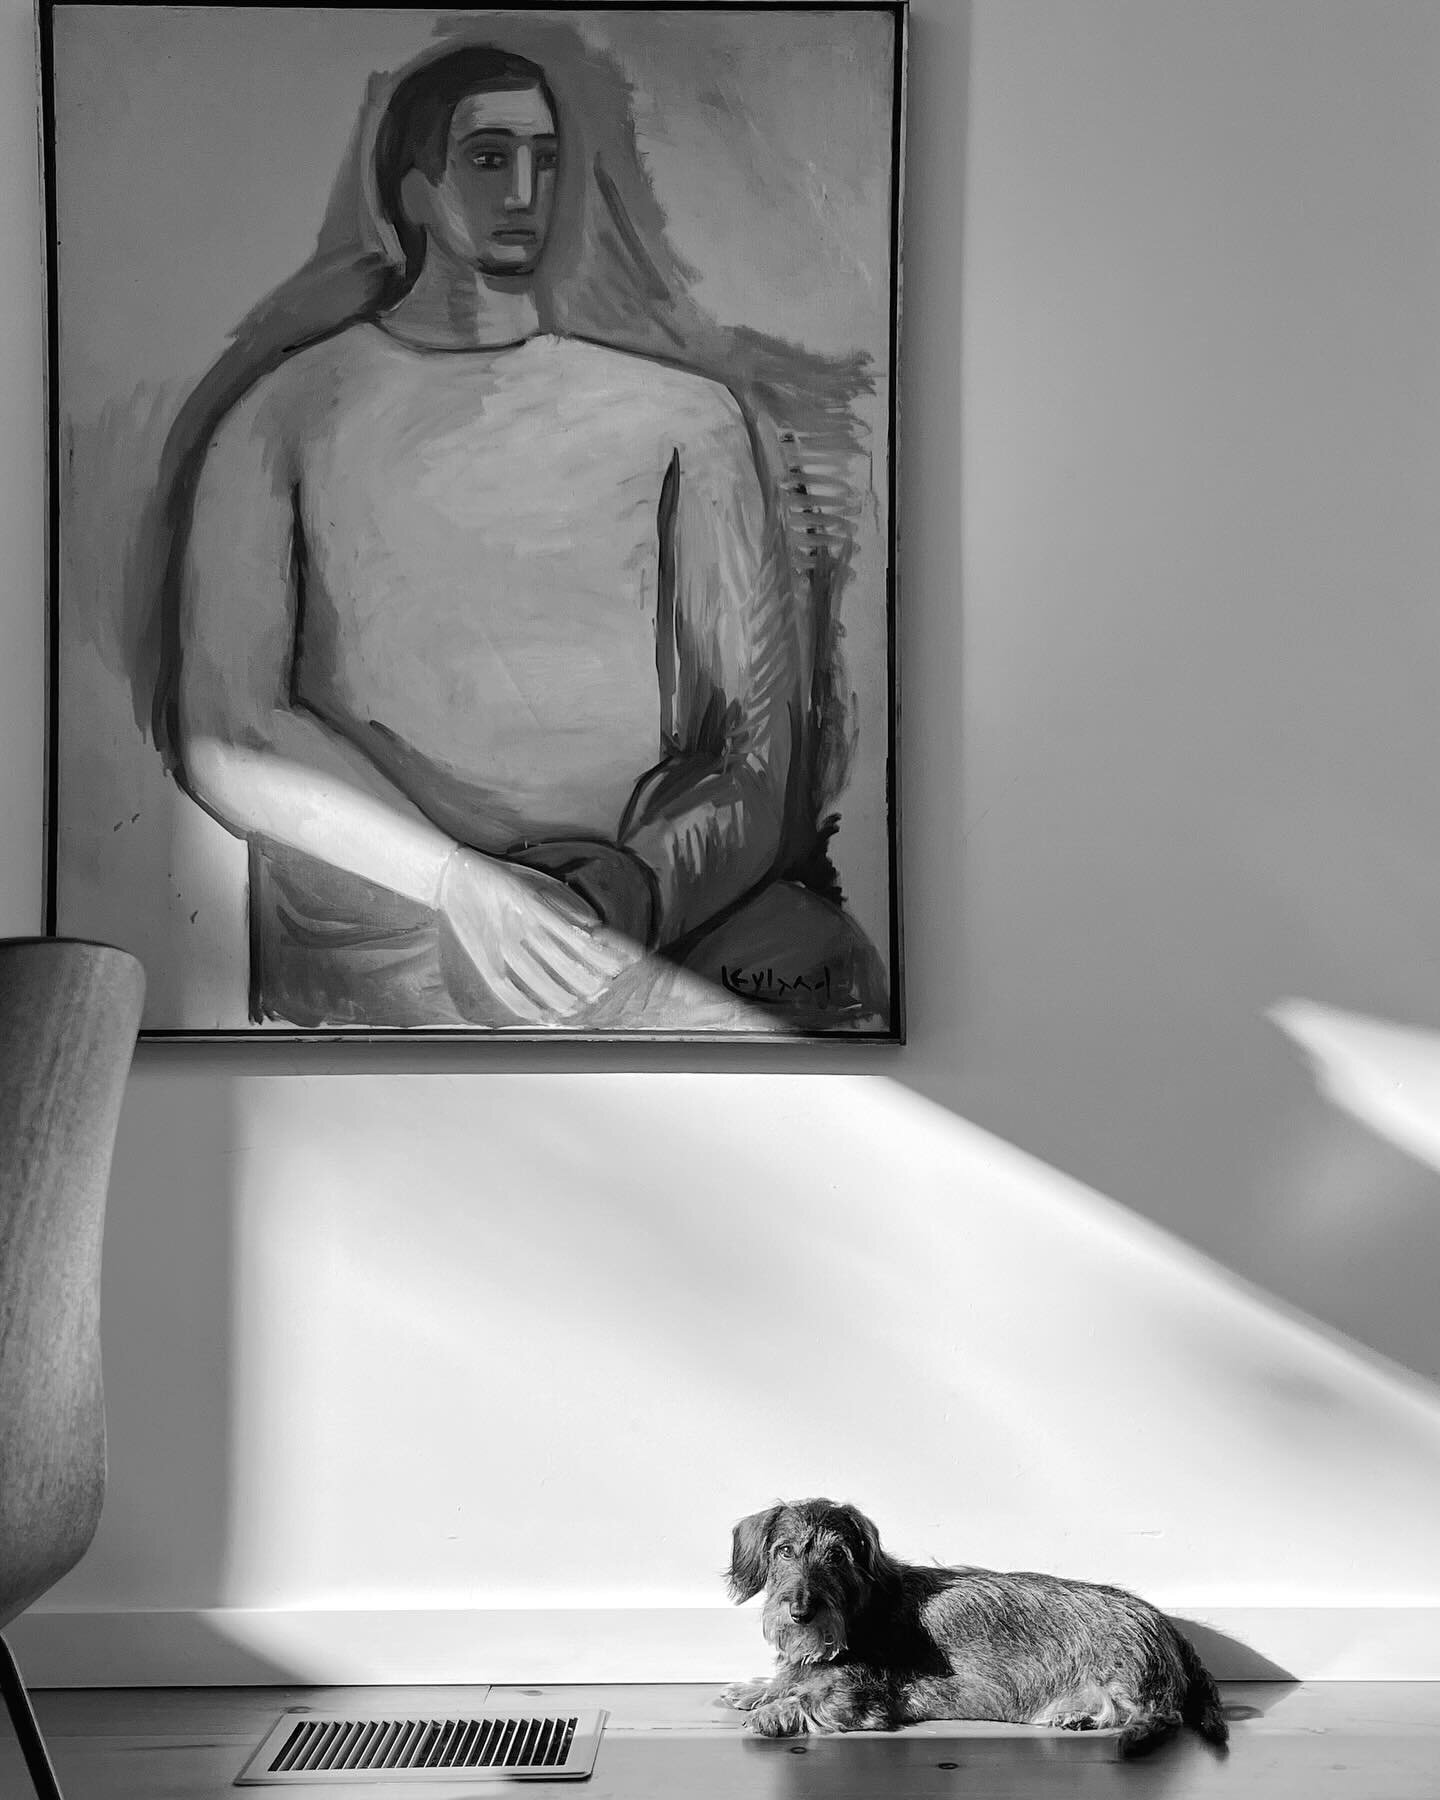 Sun, with Dog. 
.
.
#wirehairdachshund #dachshund #dacshundlove #dachshundsofinstagram #bnw_captures #bnw_greatshots #bnw #bnwphotography #bnwmood #bnwzone #bnwsouls #bnwphoto #bnwlife #bnwportrait